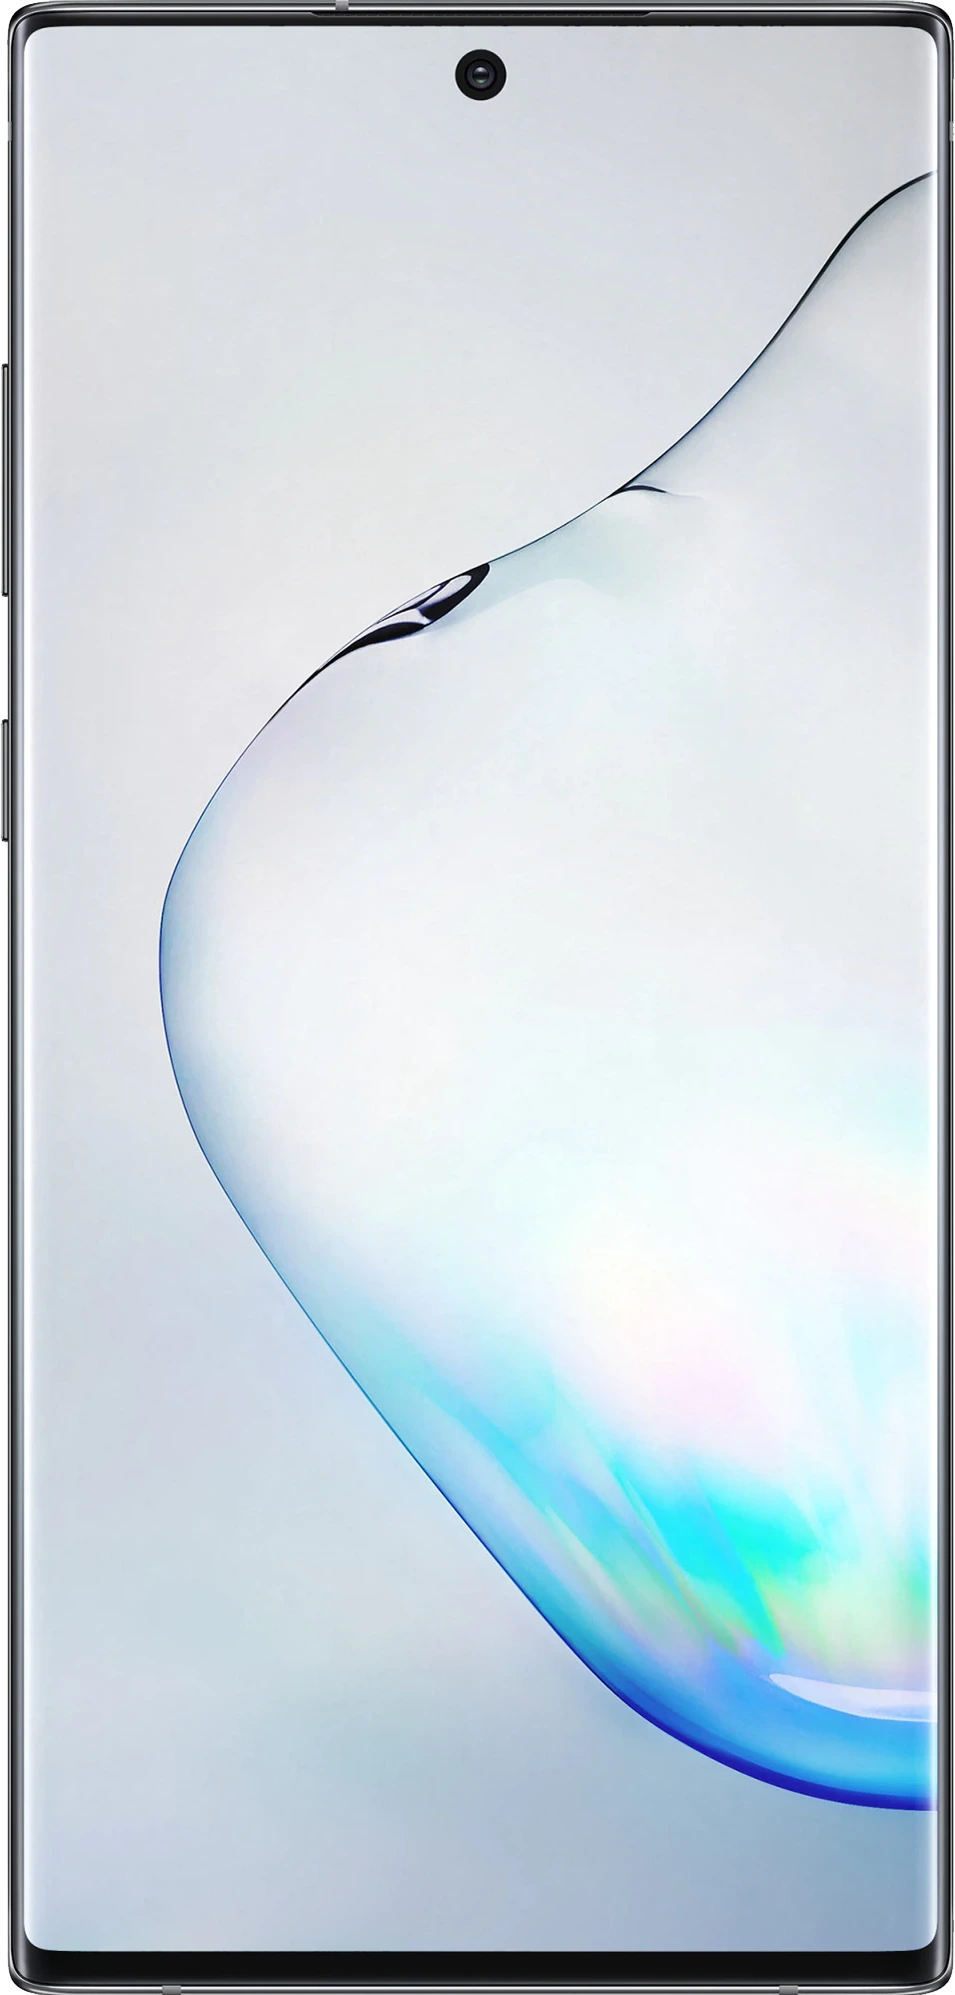 Vivid Clarity of Samsung Galaxy Note 10 Plus Display